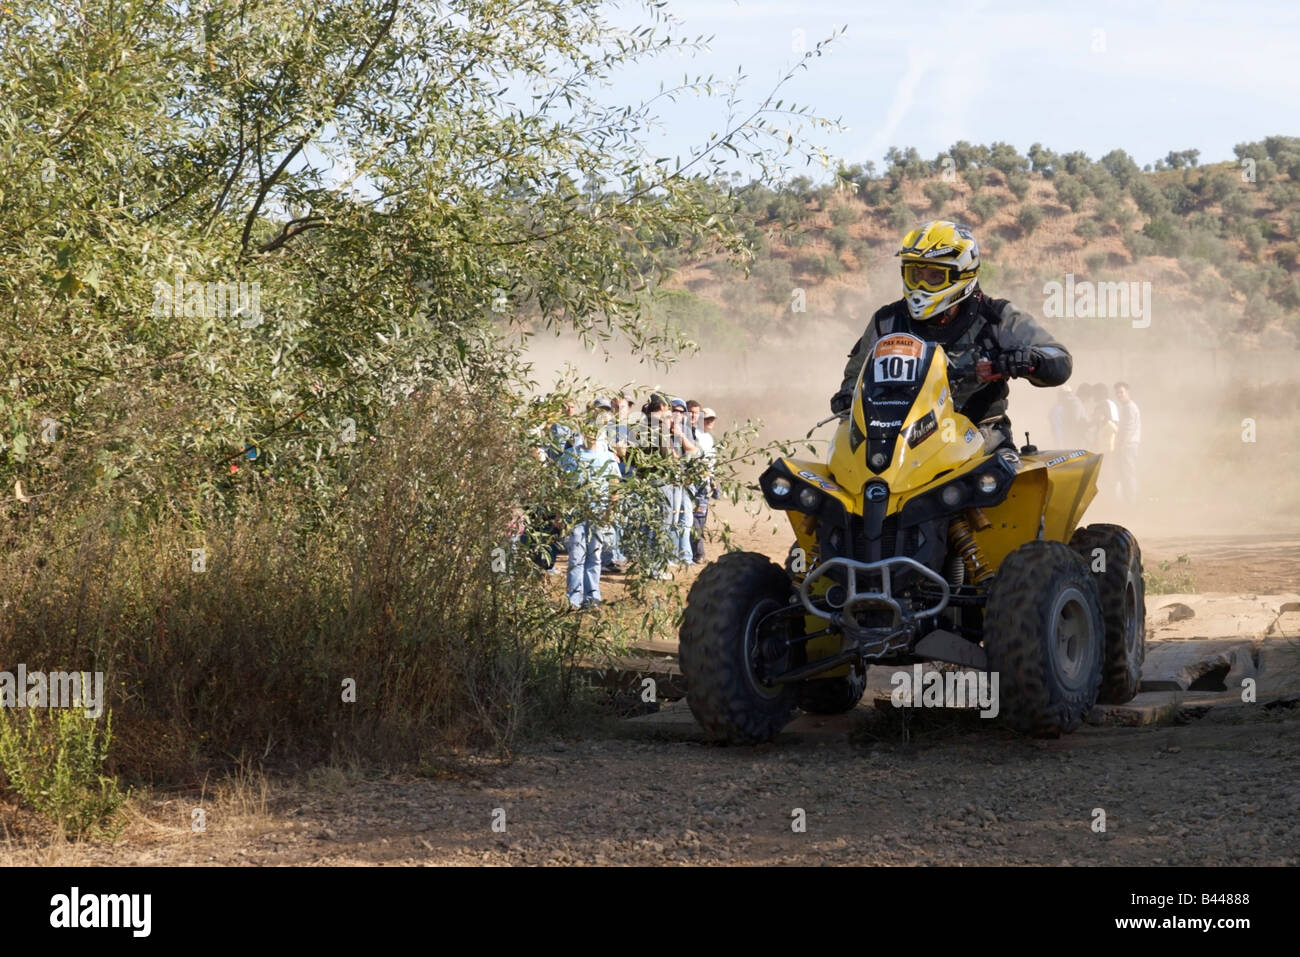 Pax-Rallye-Lisboa Portimão - Dakar Series - Quad-Bike-101 - Xtremeplus-Team - Jean Claude Auer Stockfoto